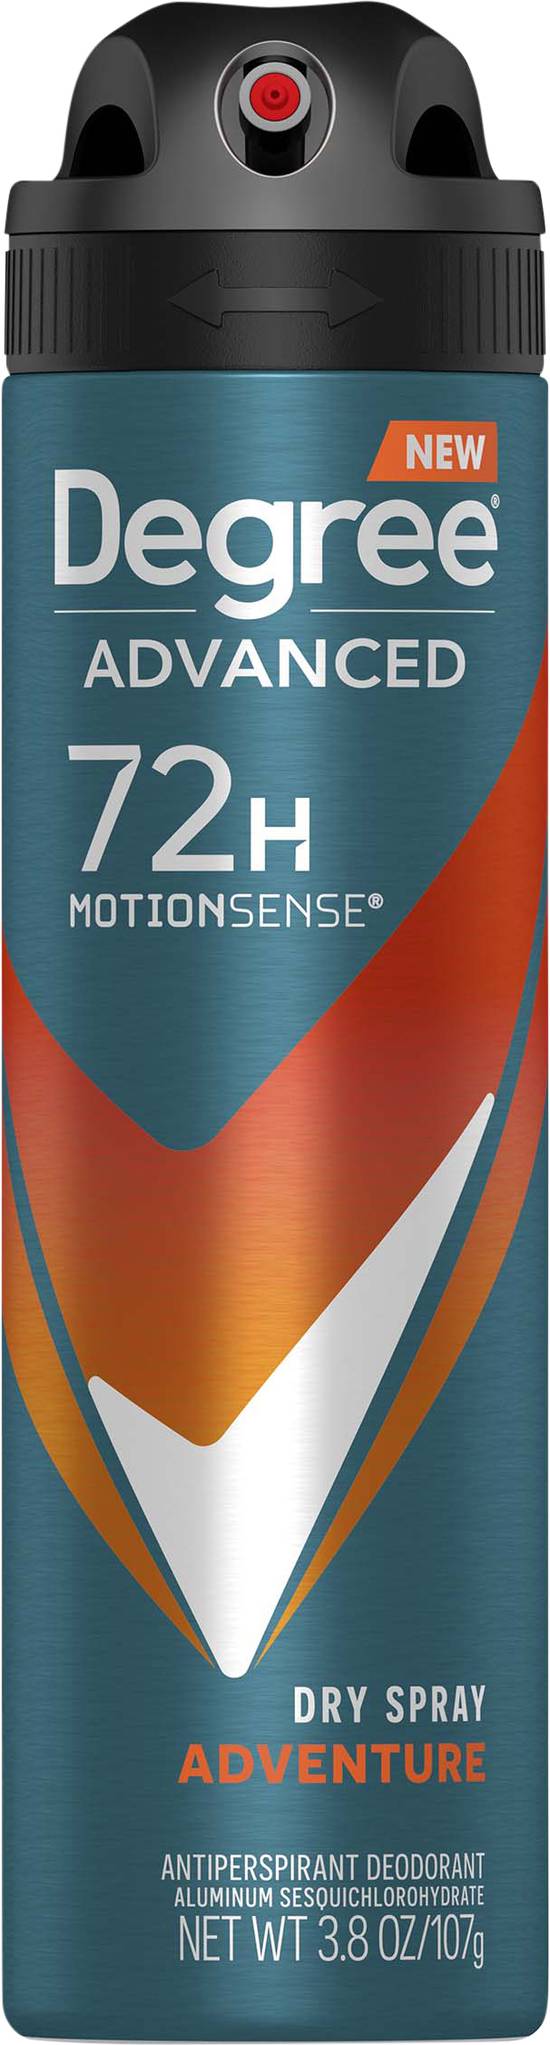 Degree Advanced Motionsense Dry Spray Adventure Antiperspirant Deodorant